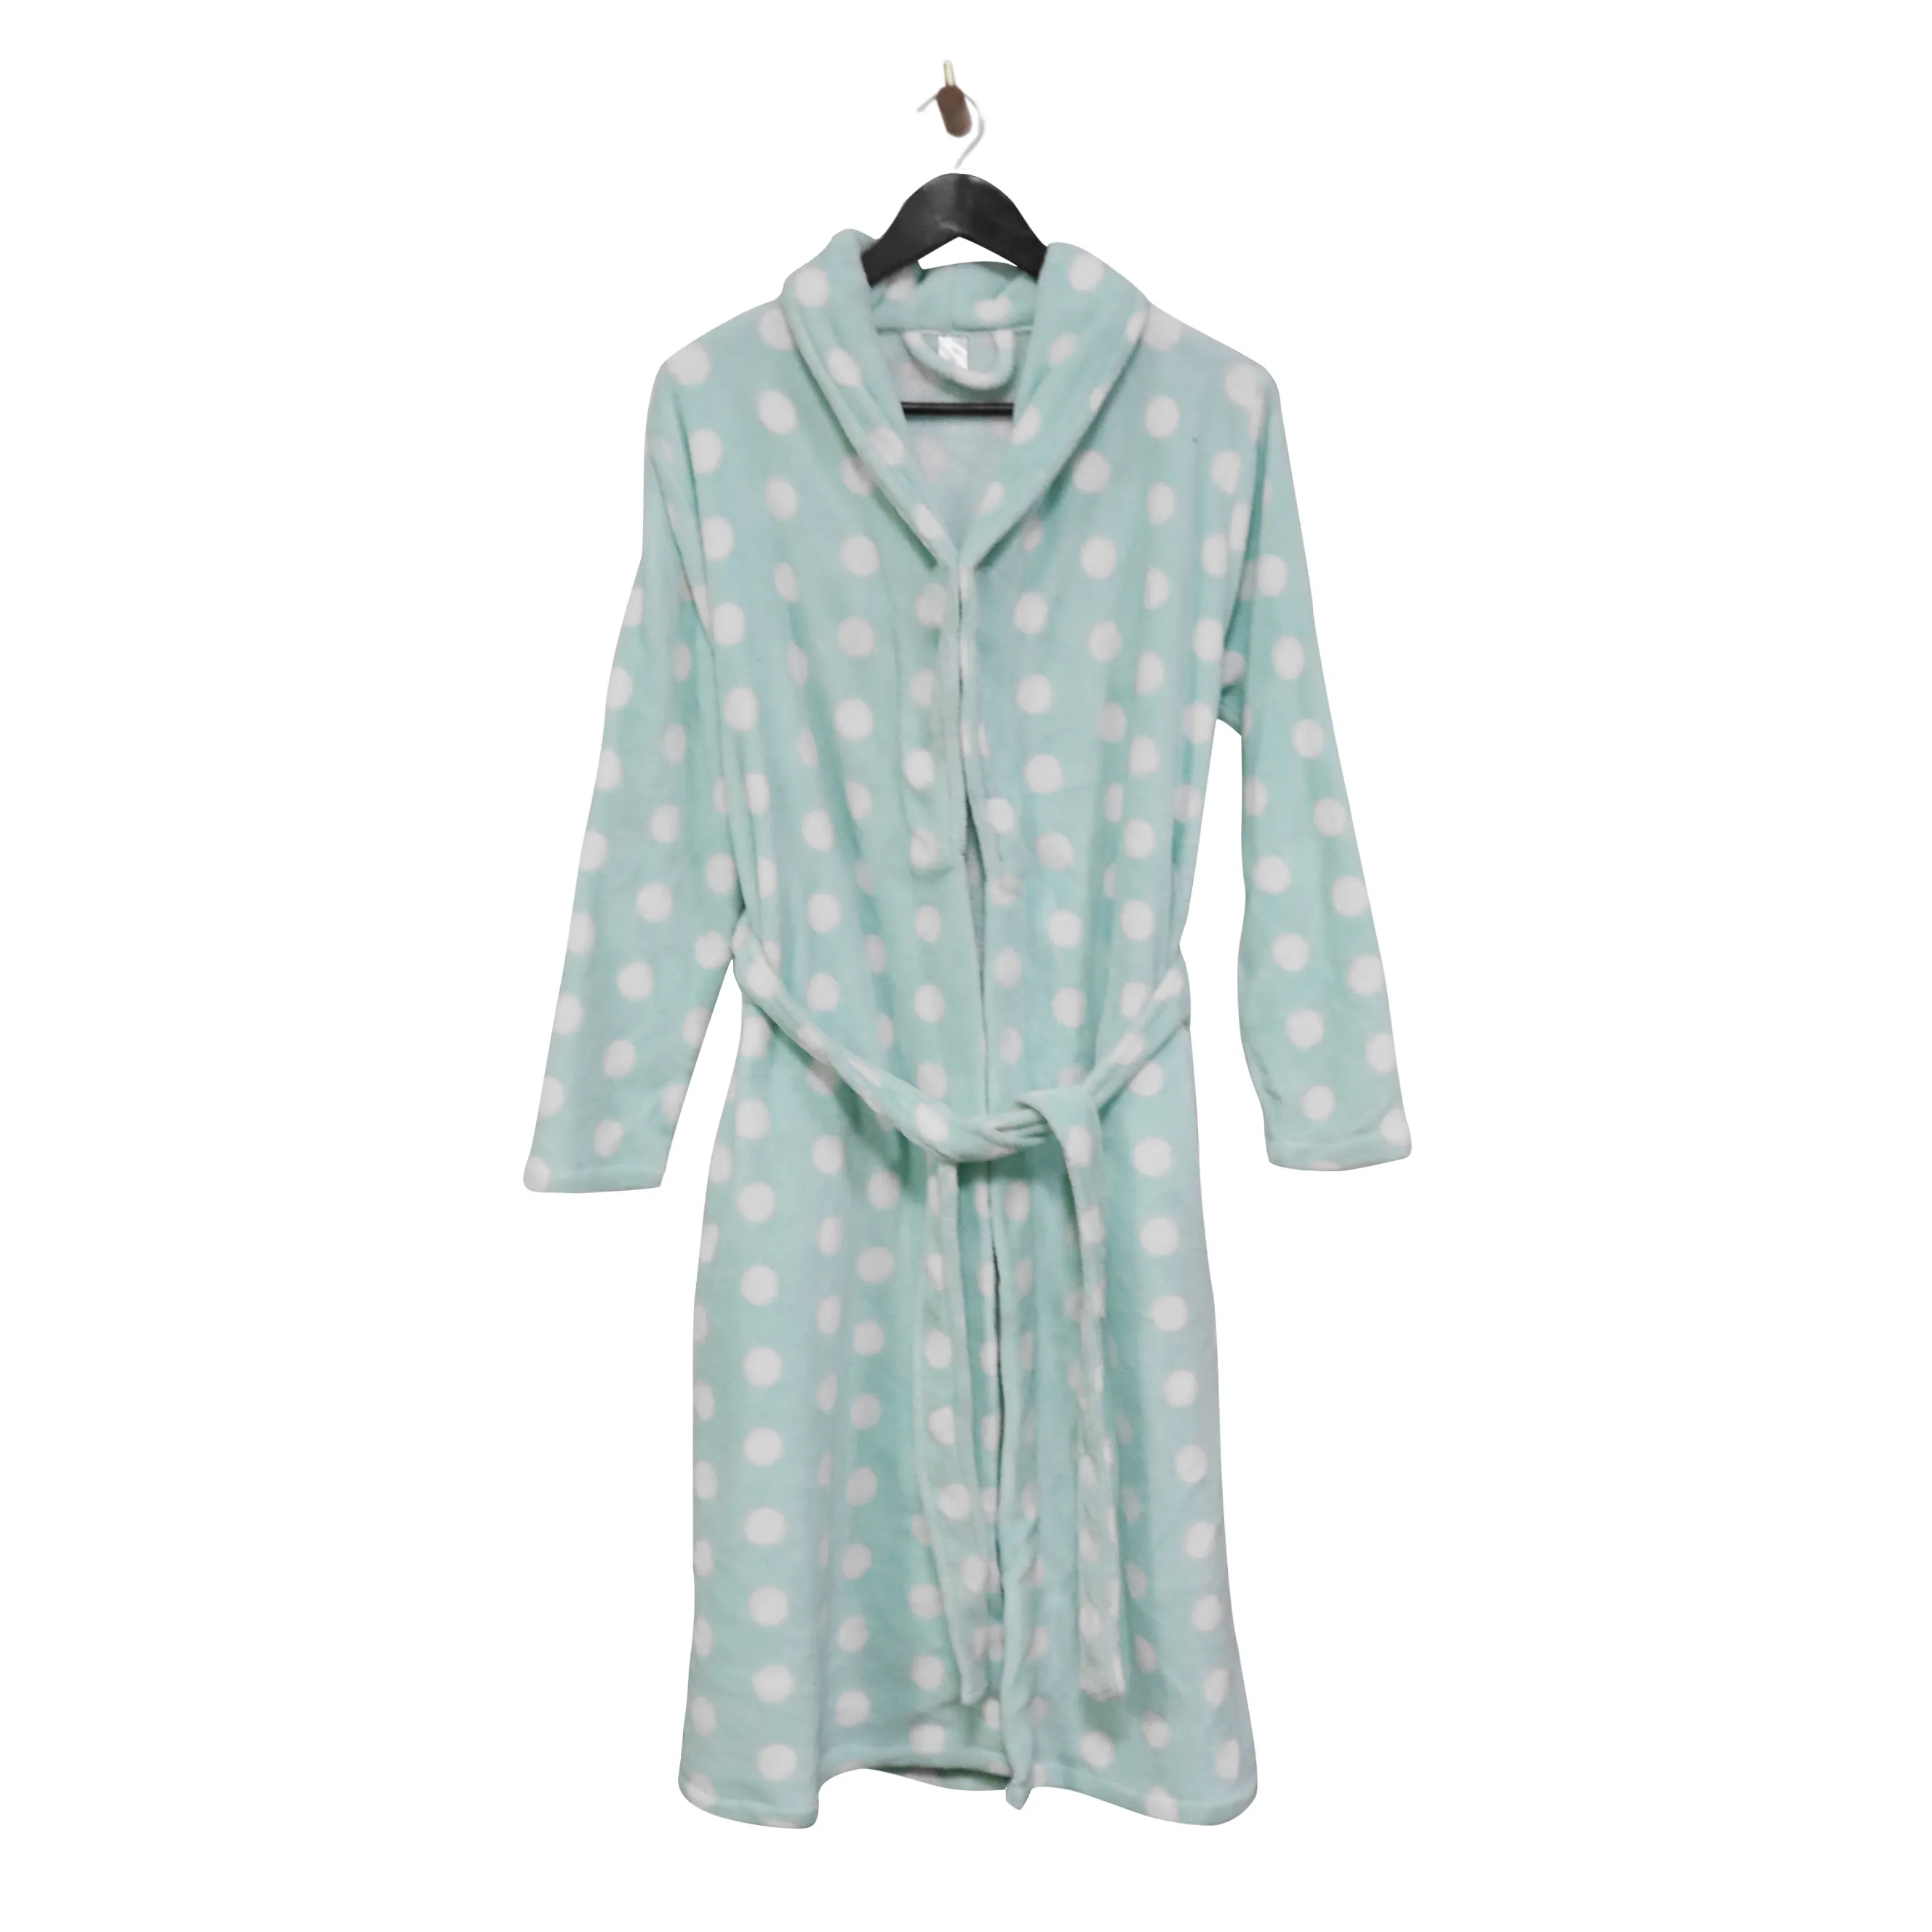 women sleepwear long 100% polyester robes hot sales new design flannel coral fleece pajamas gown sleepwear